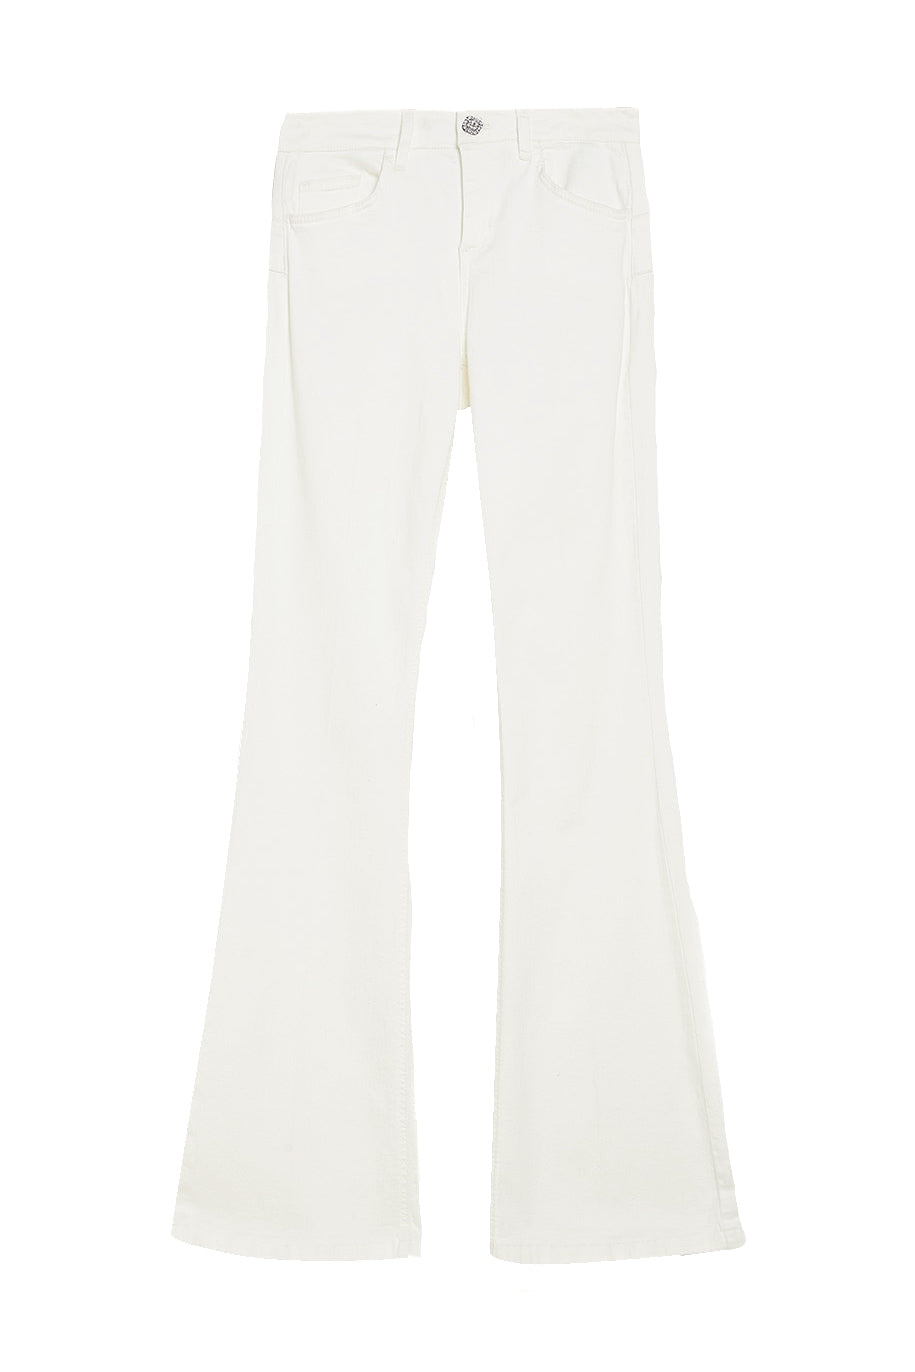 LIU JO Jeans flare in denim bianco stretch ecosostenibile - Mancinelli 1954